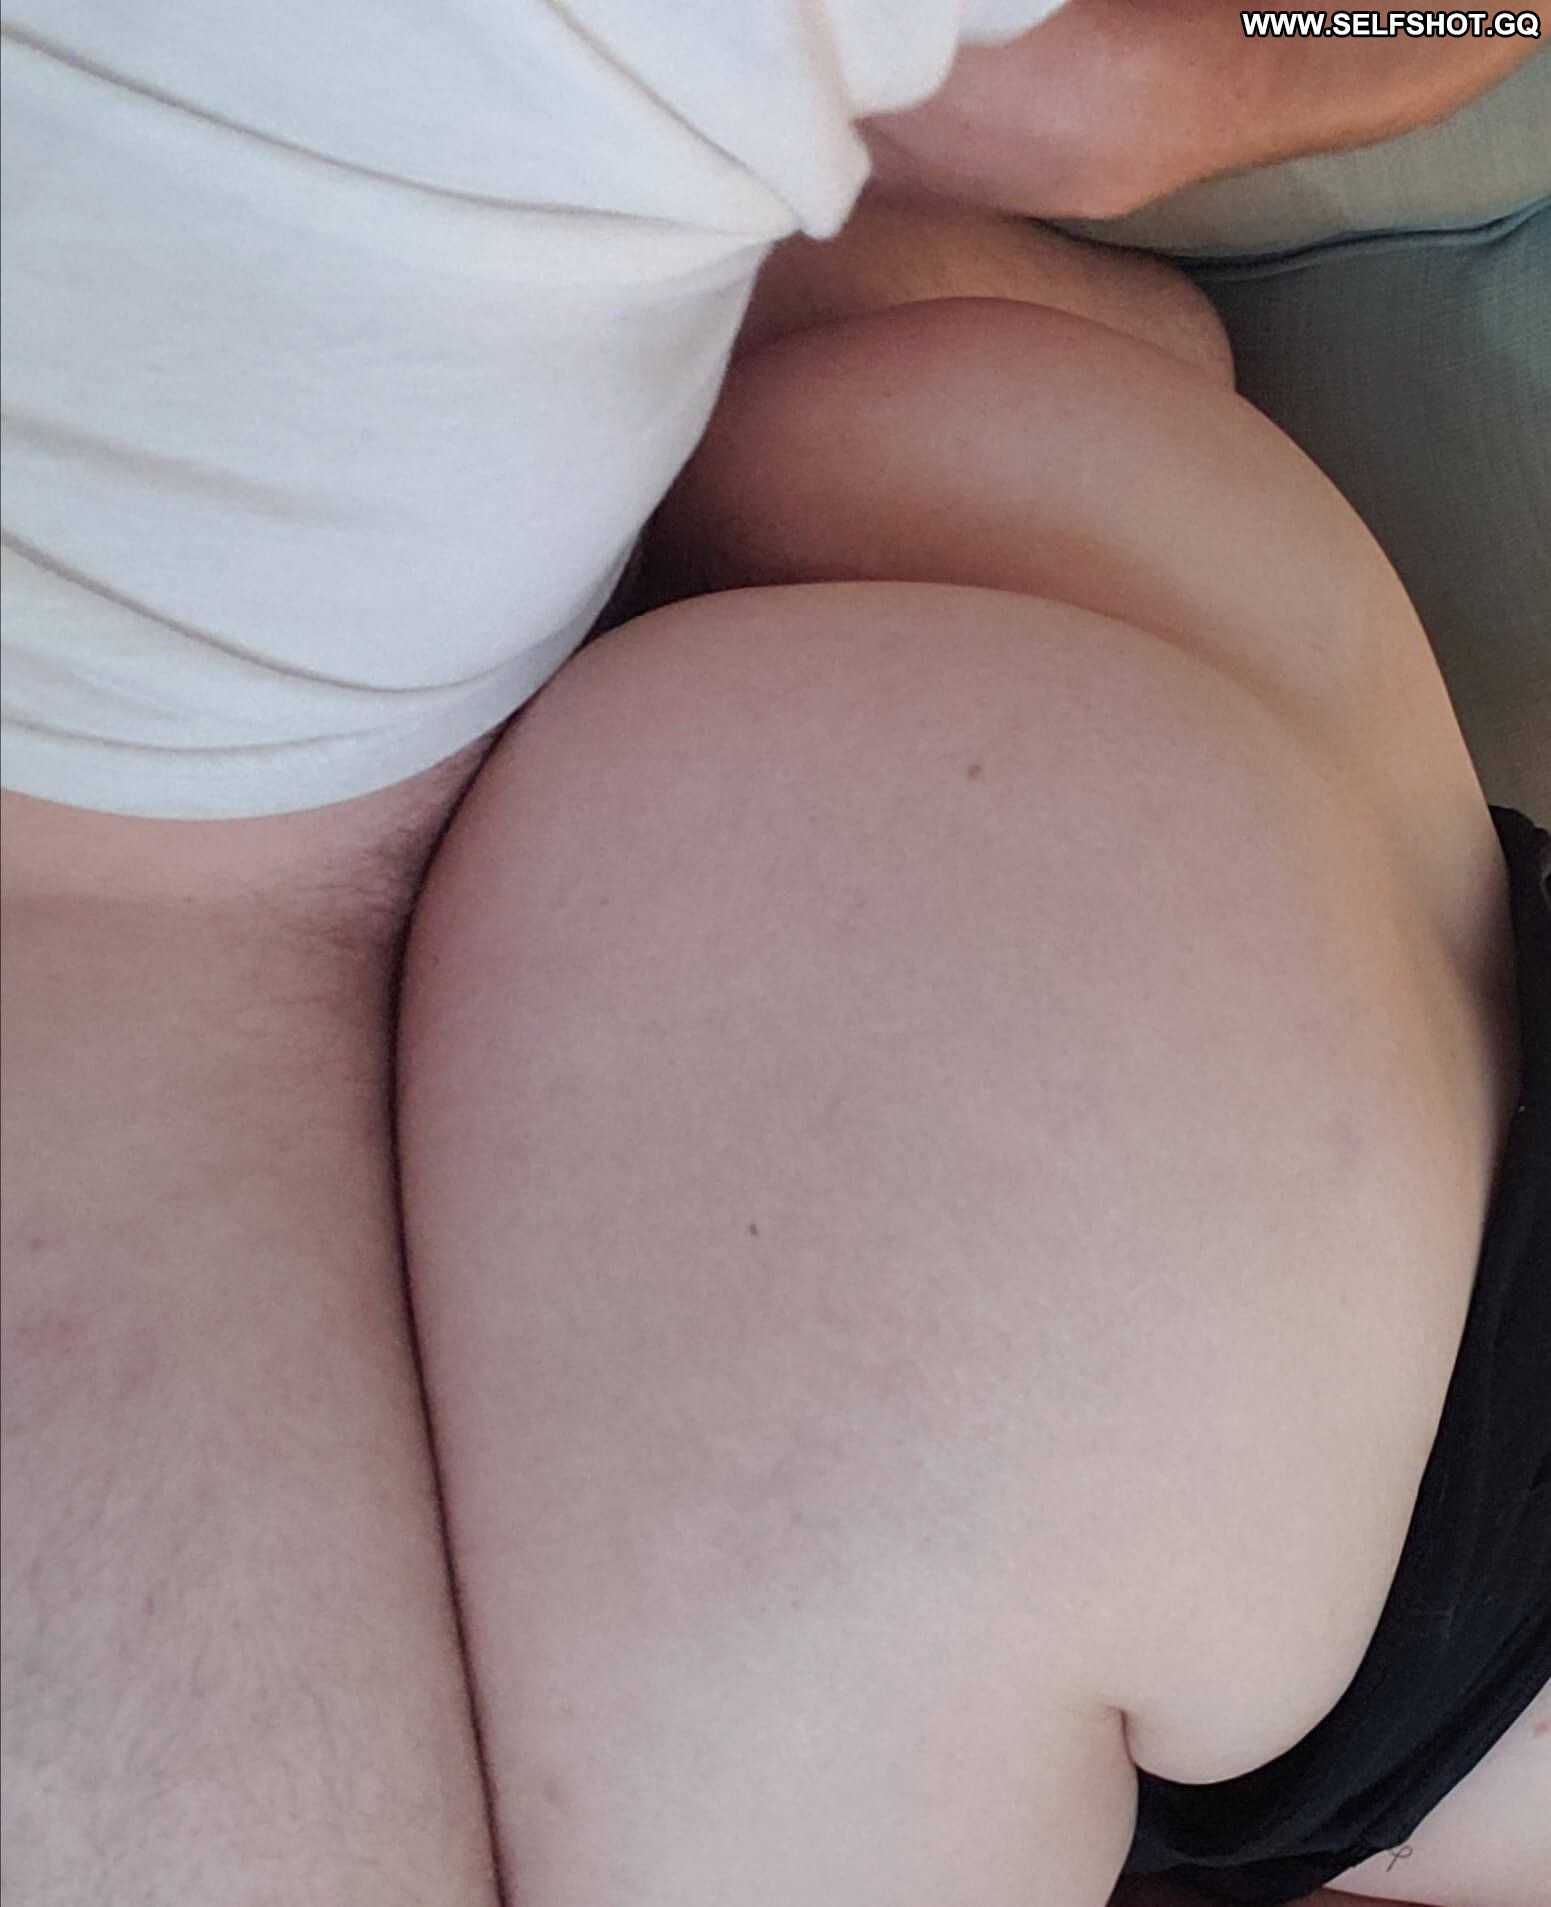 Theodora Big Big Girlfriend Nude Selfies Sex Brunette Big Nude Nude